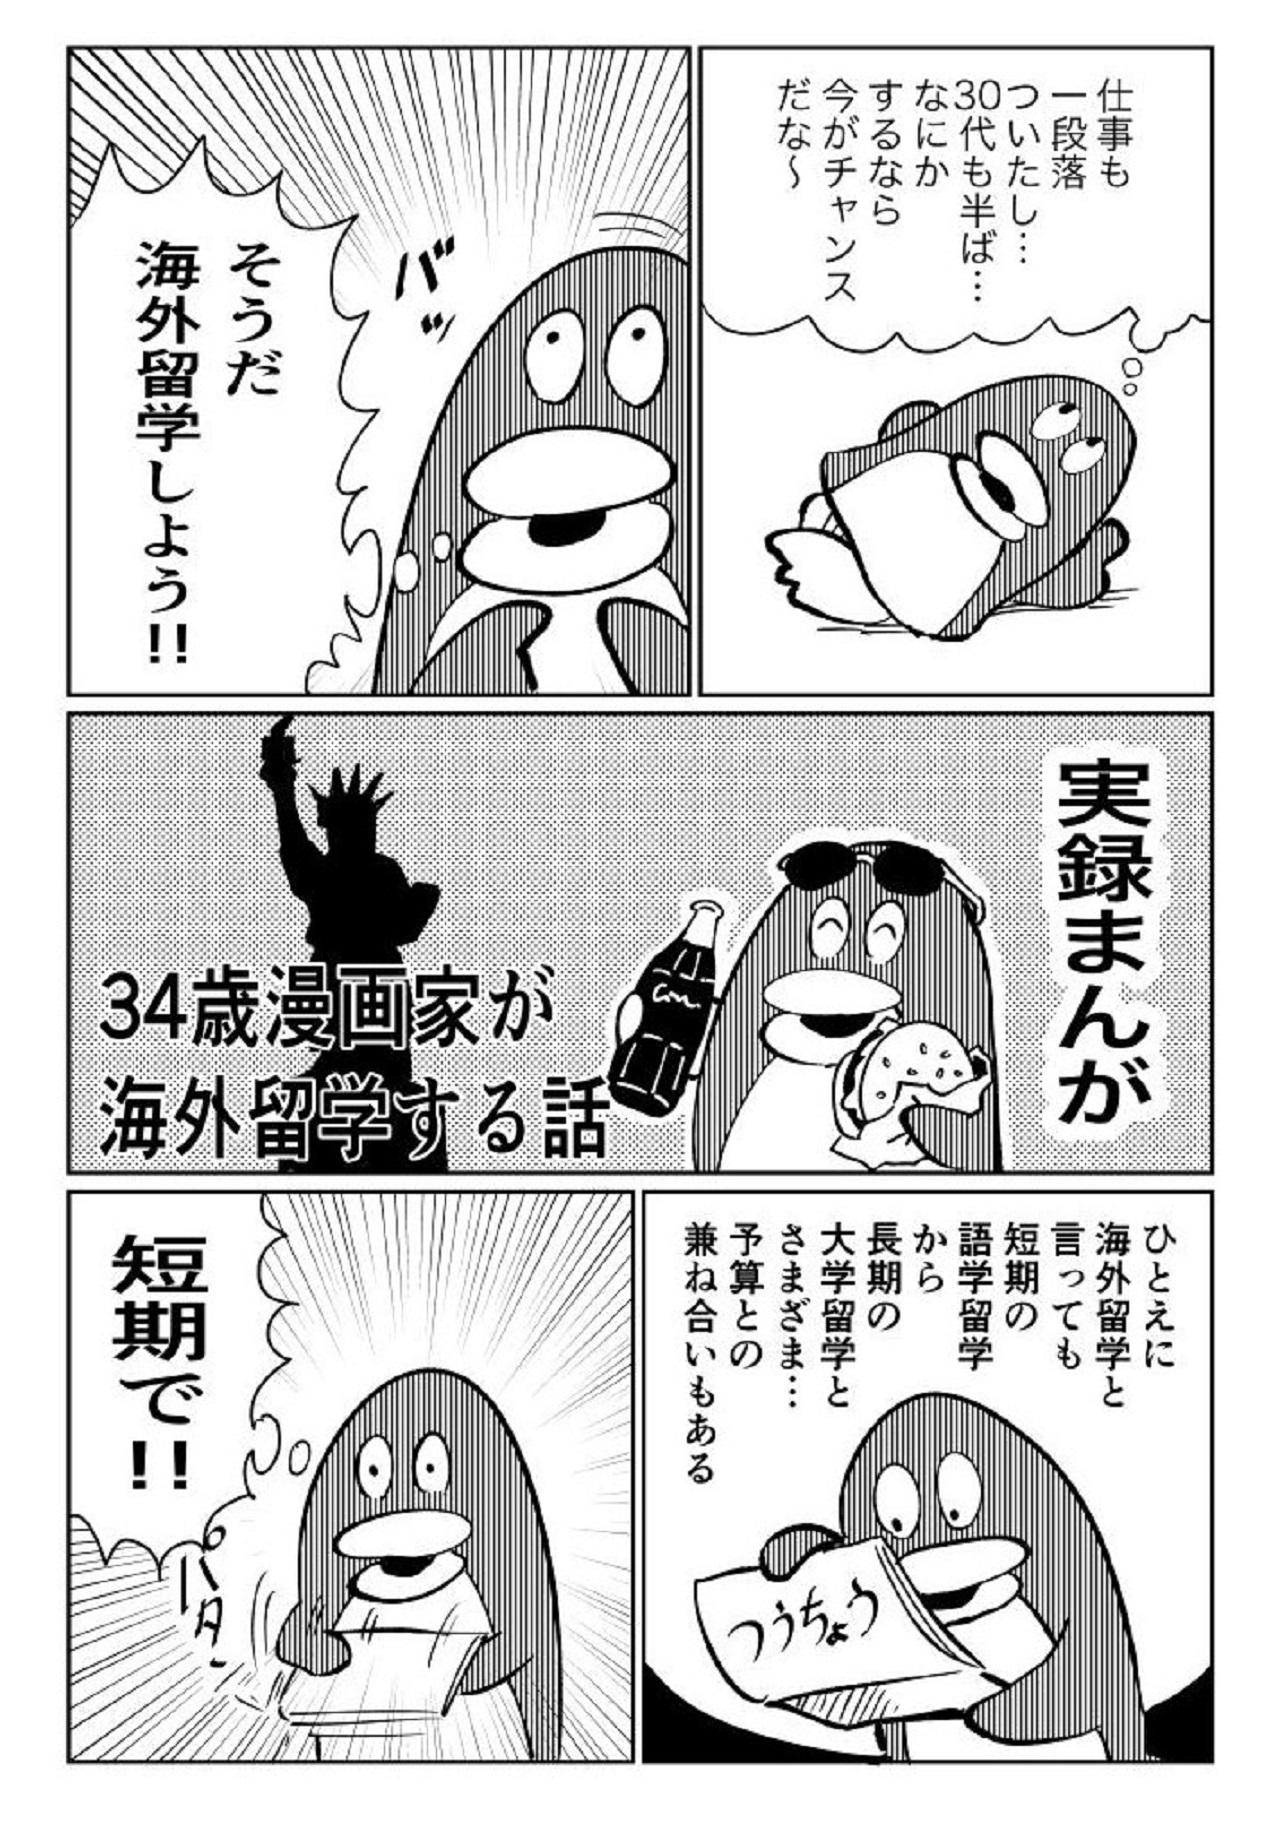 https://www.ryugaku.co.jp/column/images/34sai_1_1280.jpg